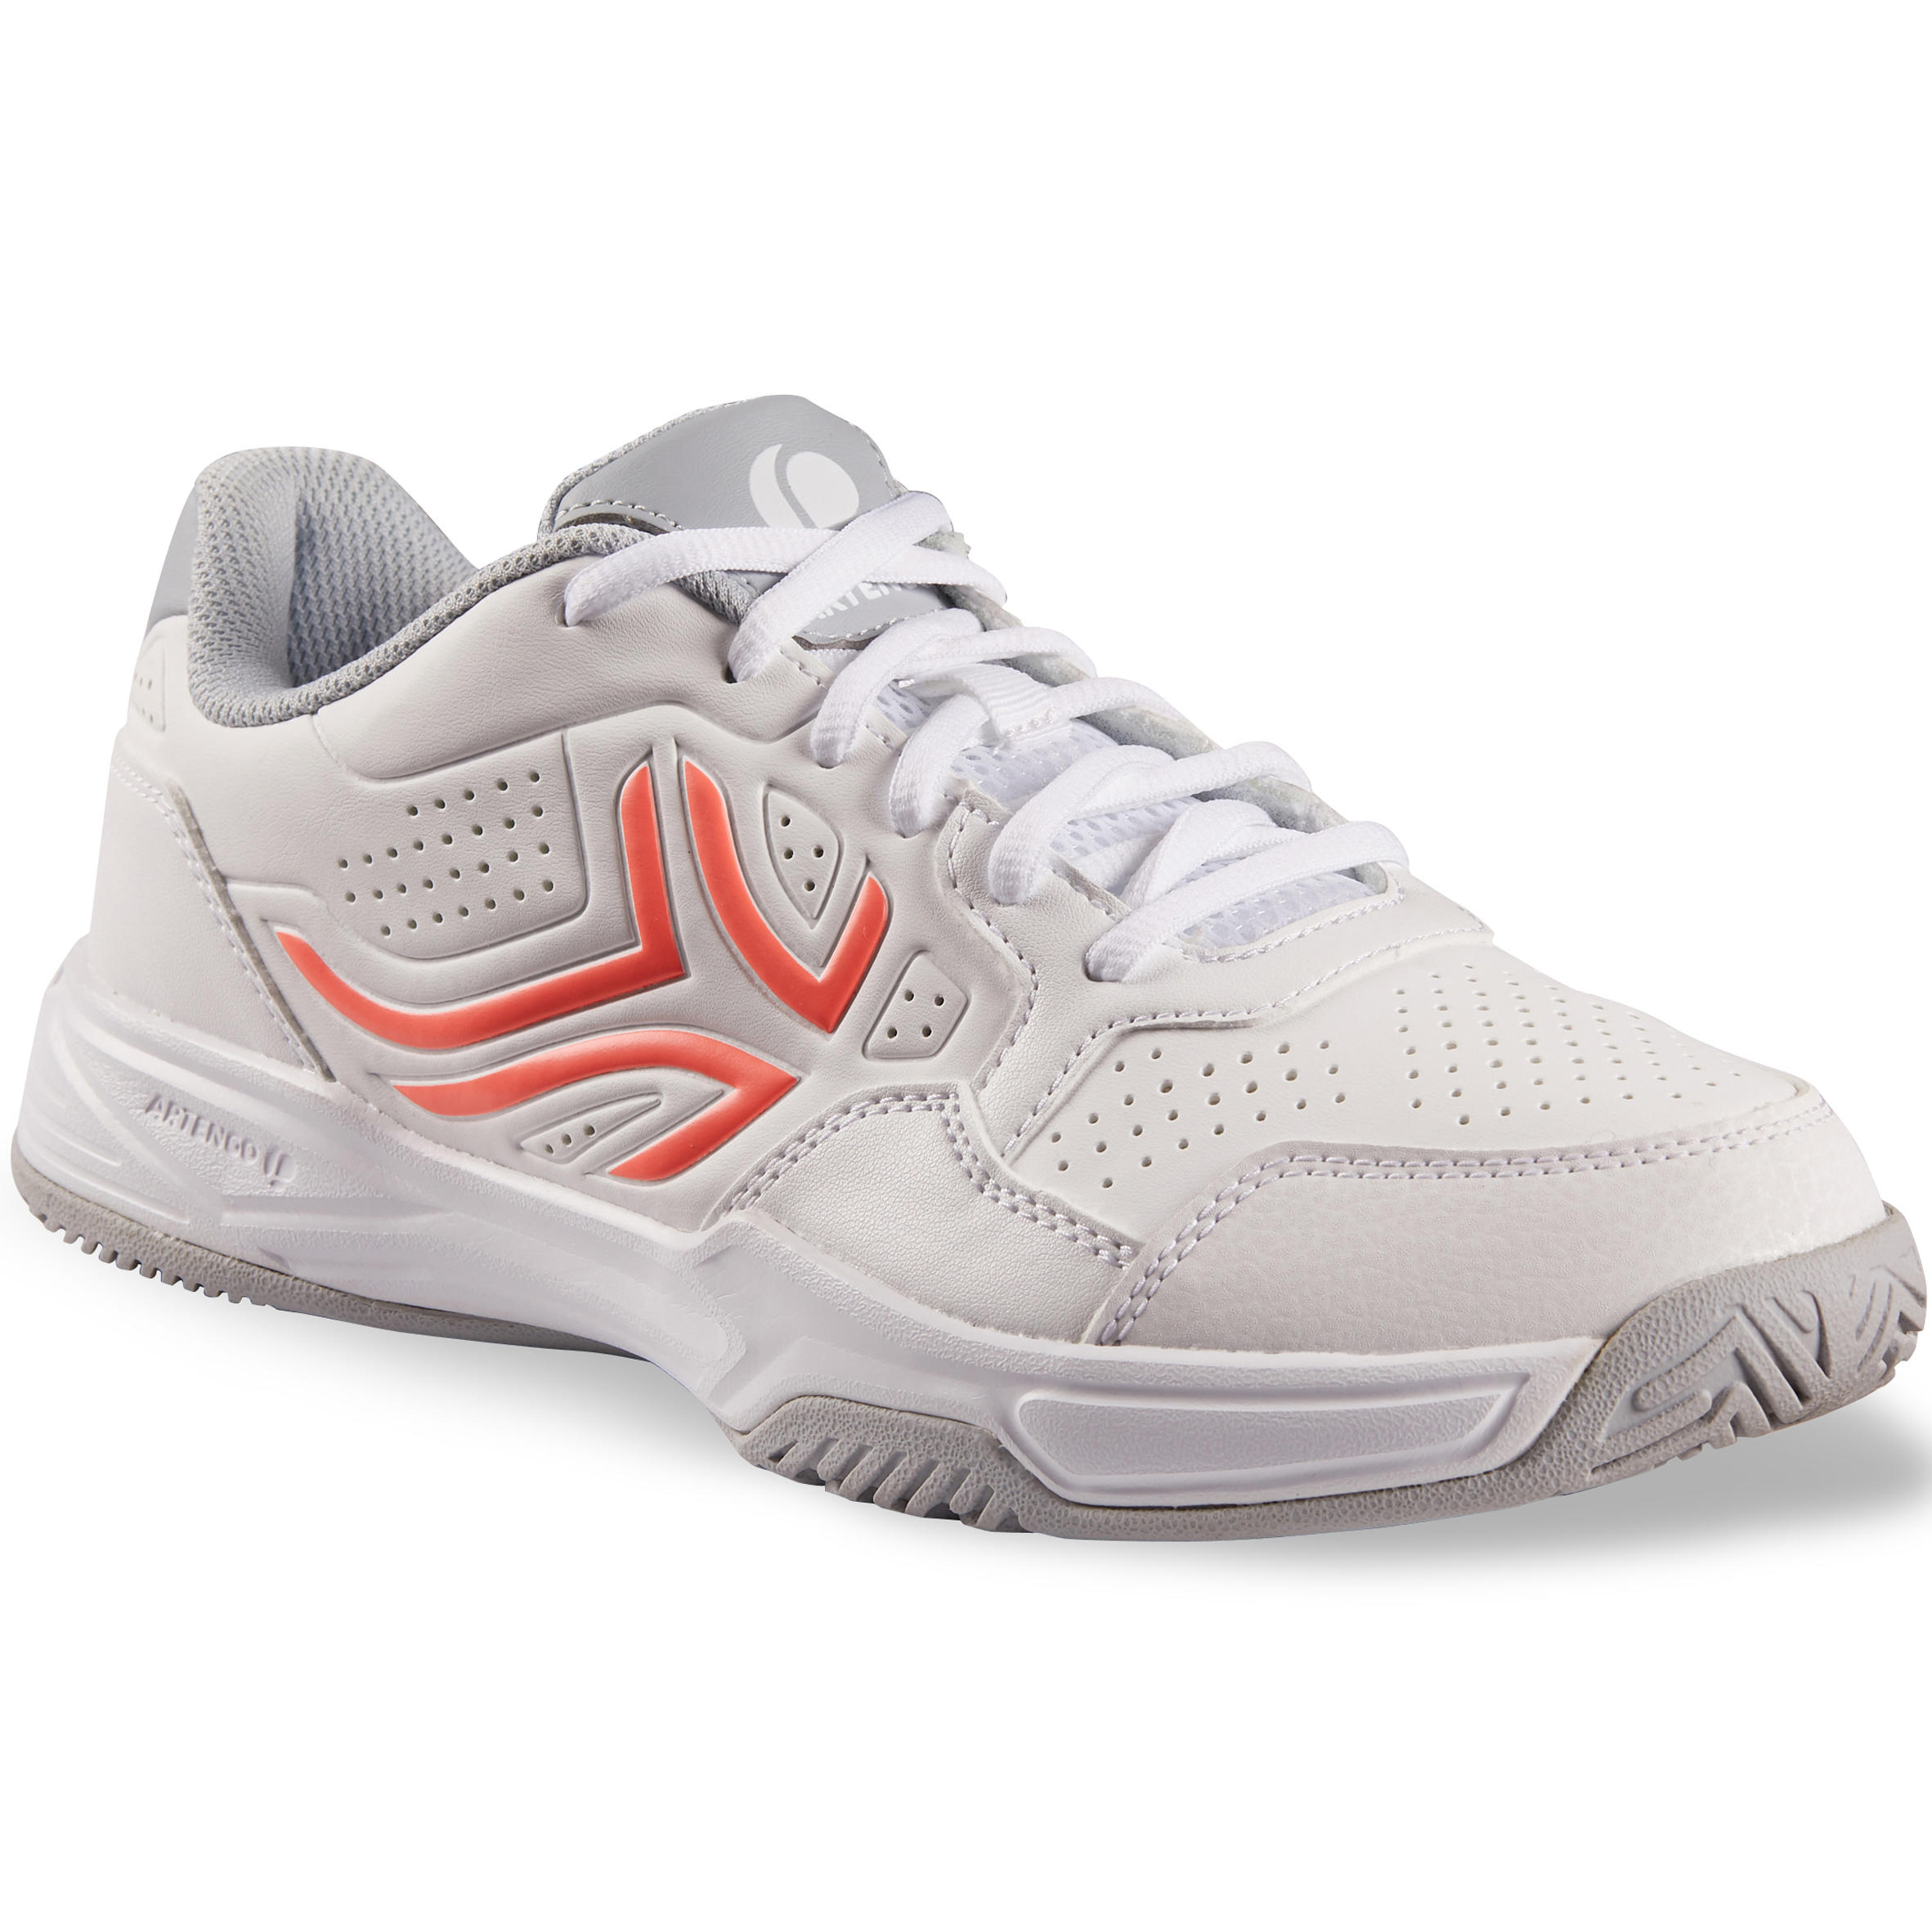 TS190 Women's Tennis Shoes - White 